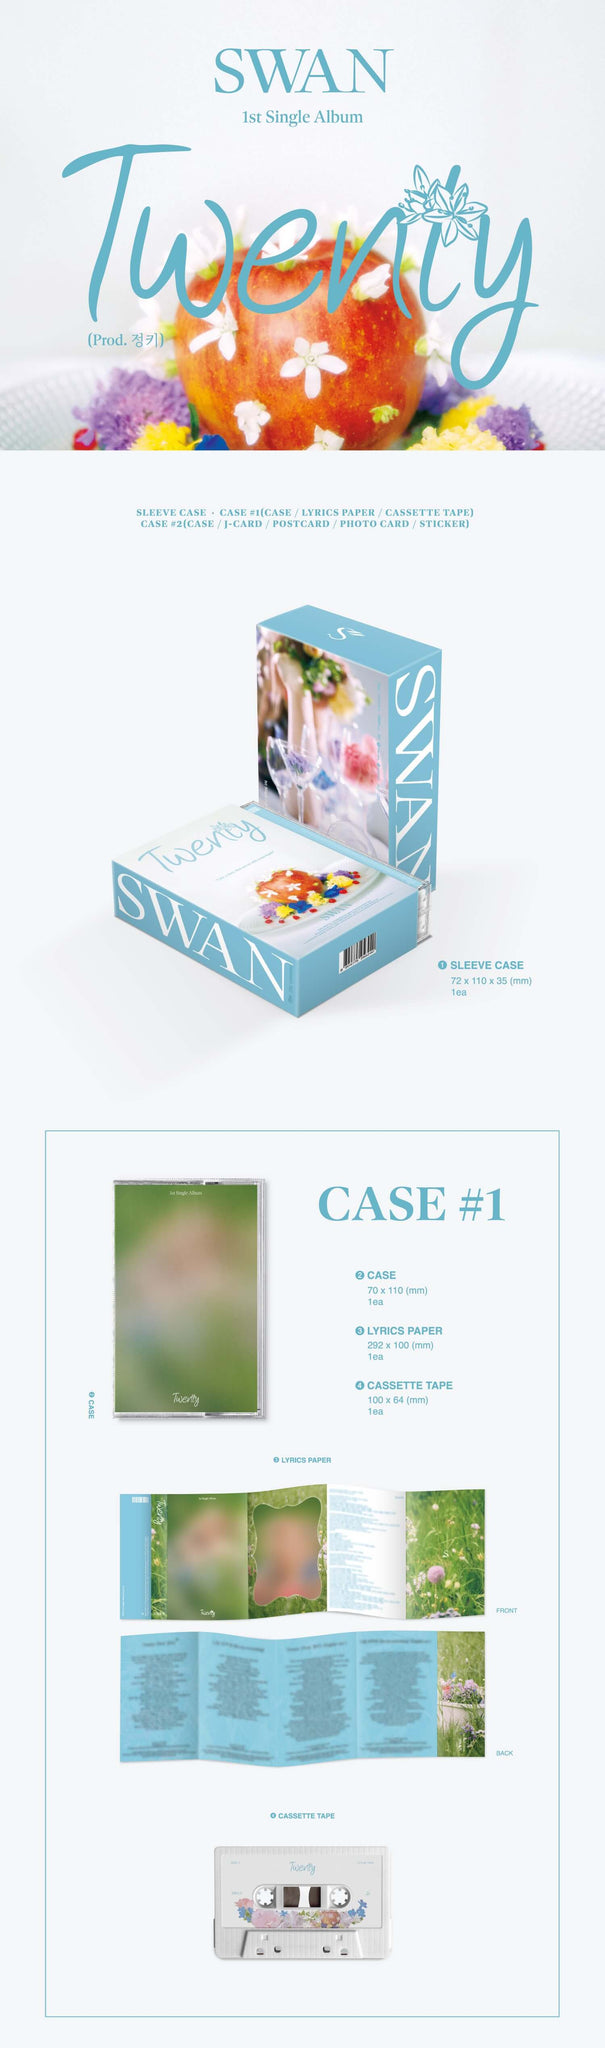 Swan 1st Single Album Twenty (Prod. Jung Key) Inclusions Sleeve Case Case Lyrics Paper Cassette Tape